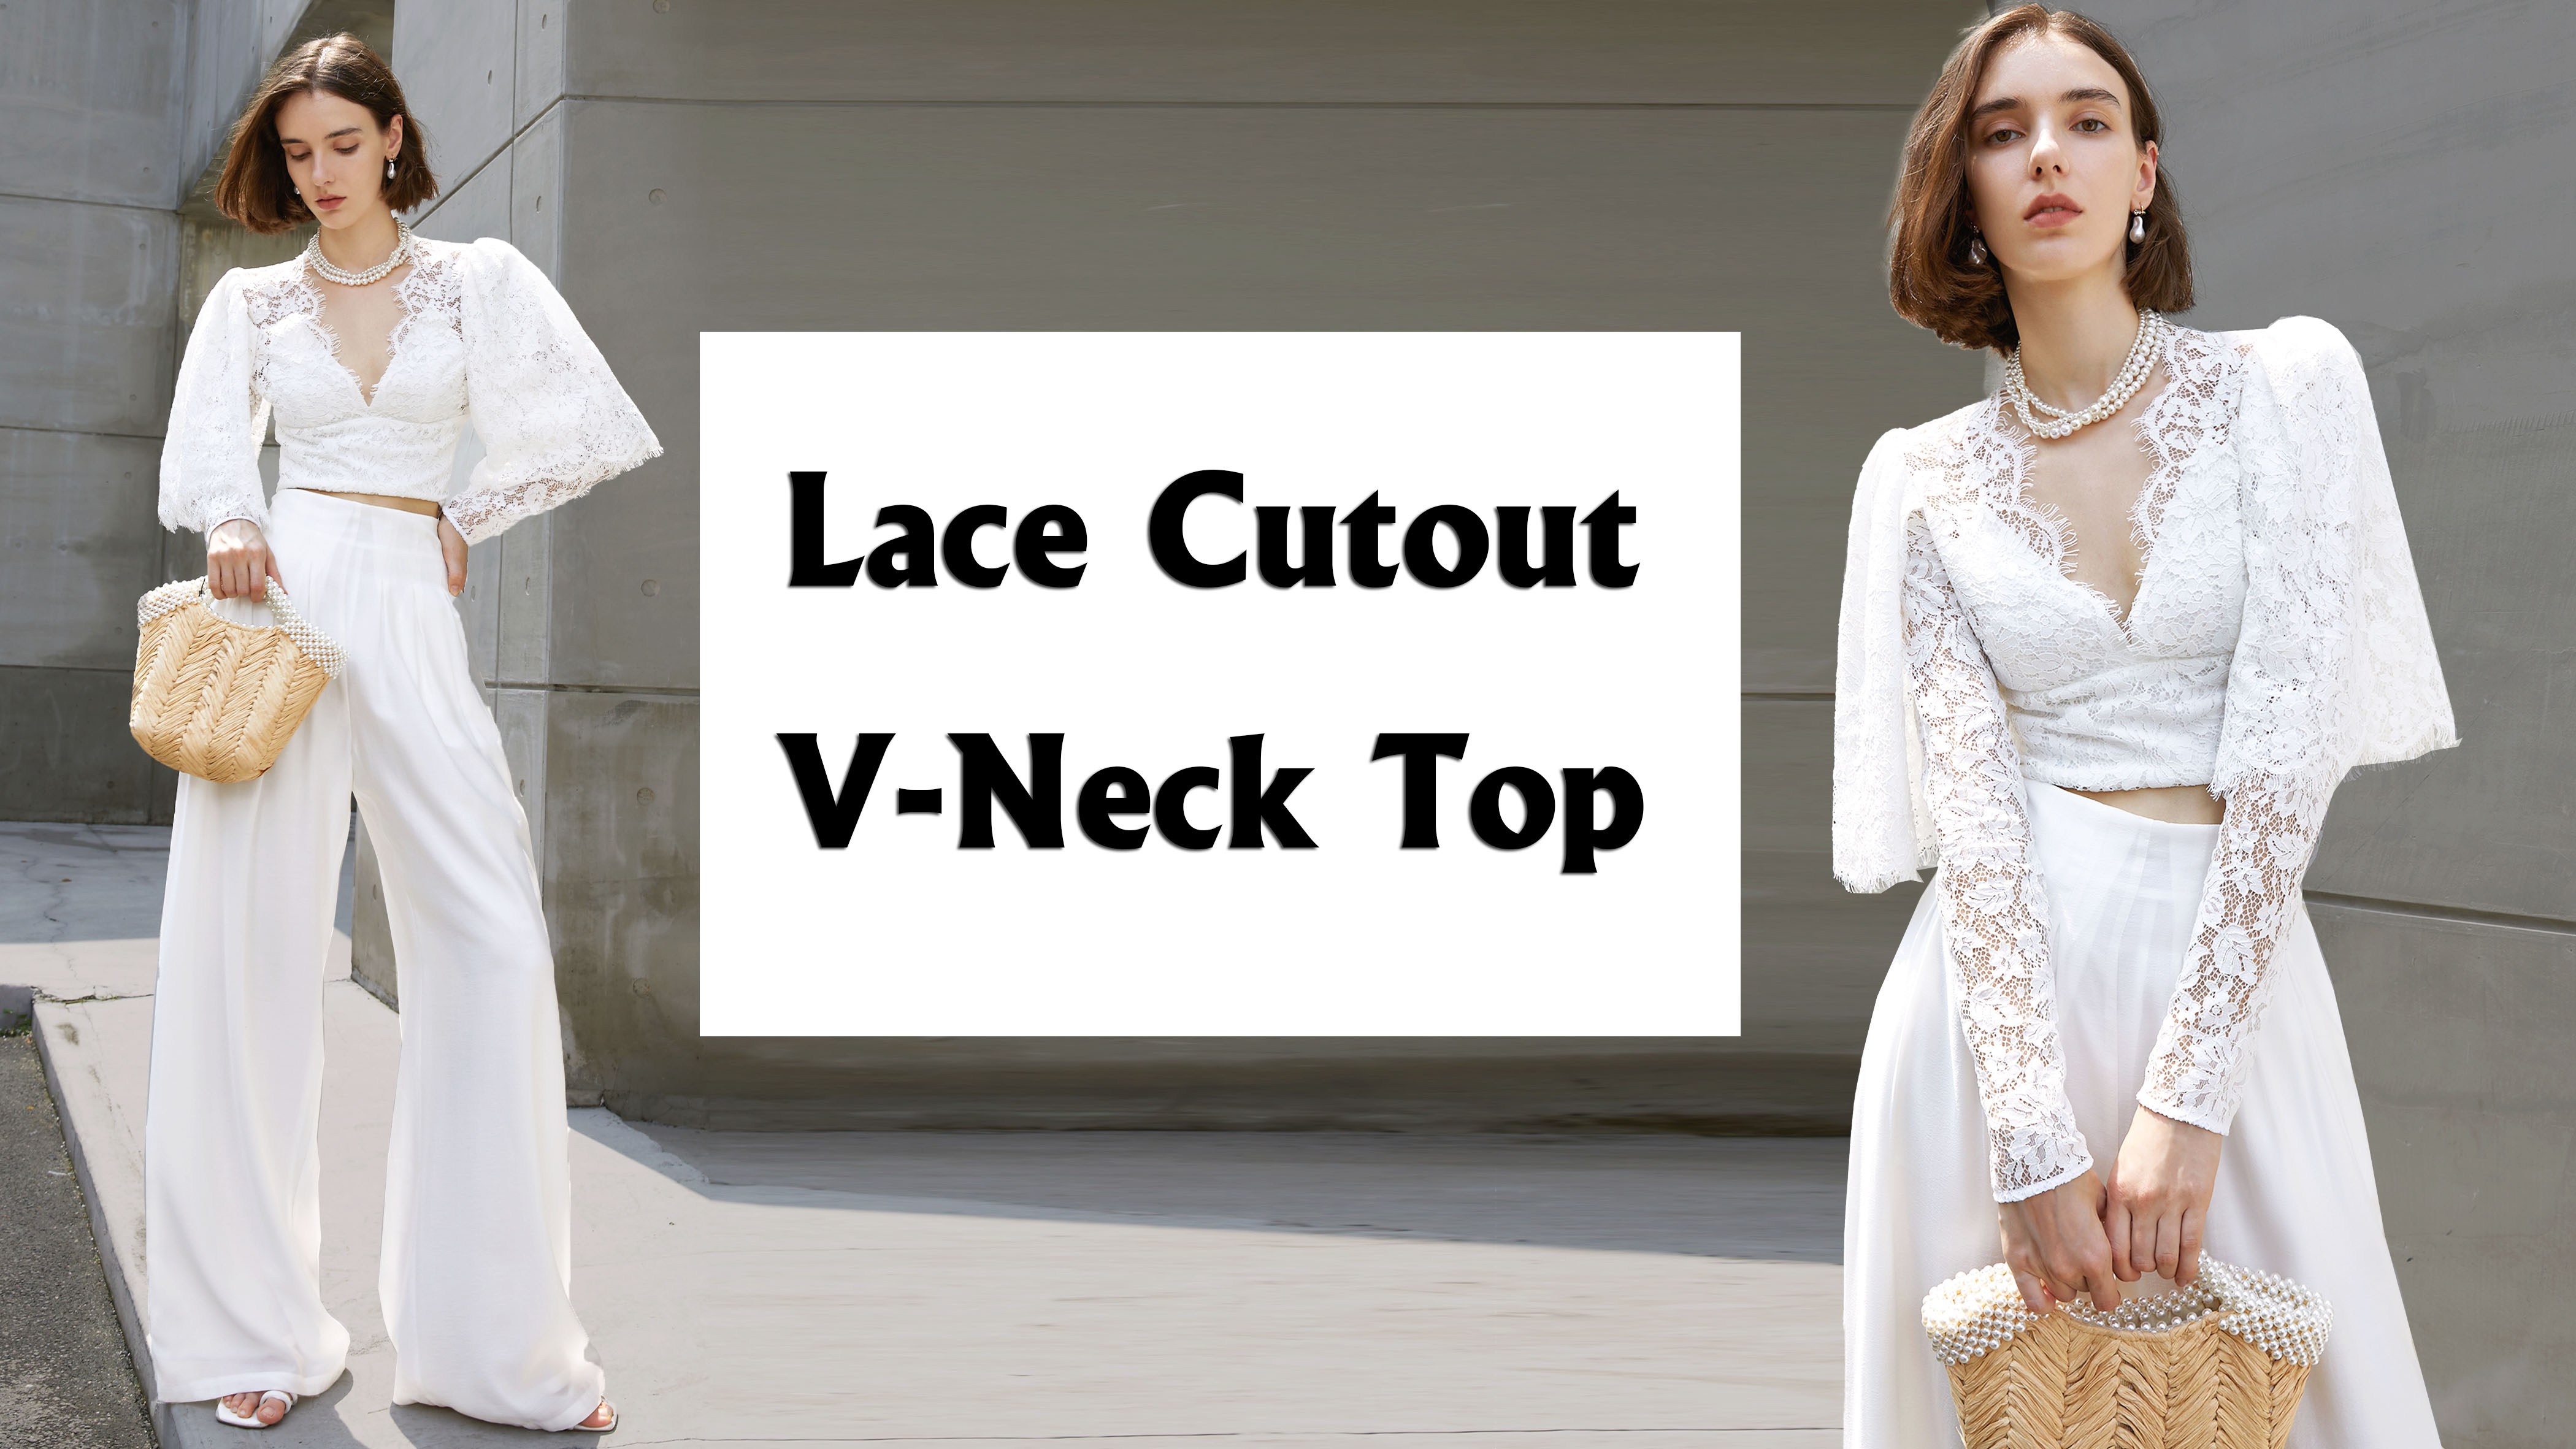 Quality Lace Cutout V-Neck Top Manufacturer |I-Auschalink